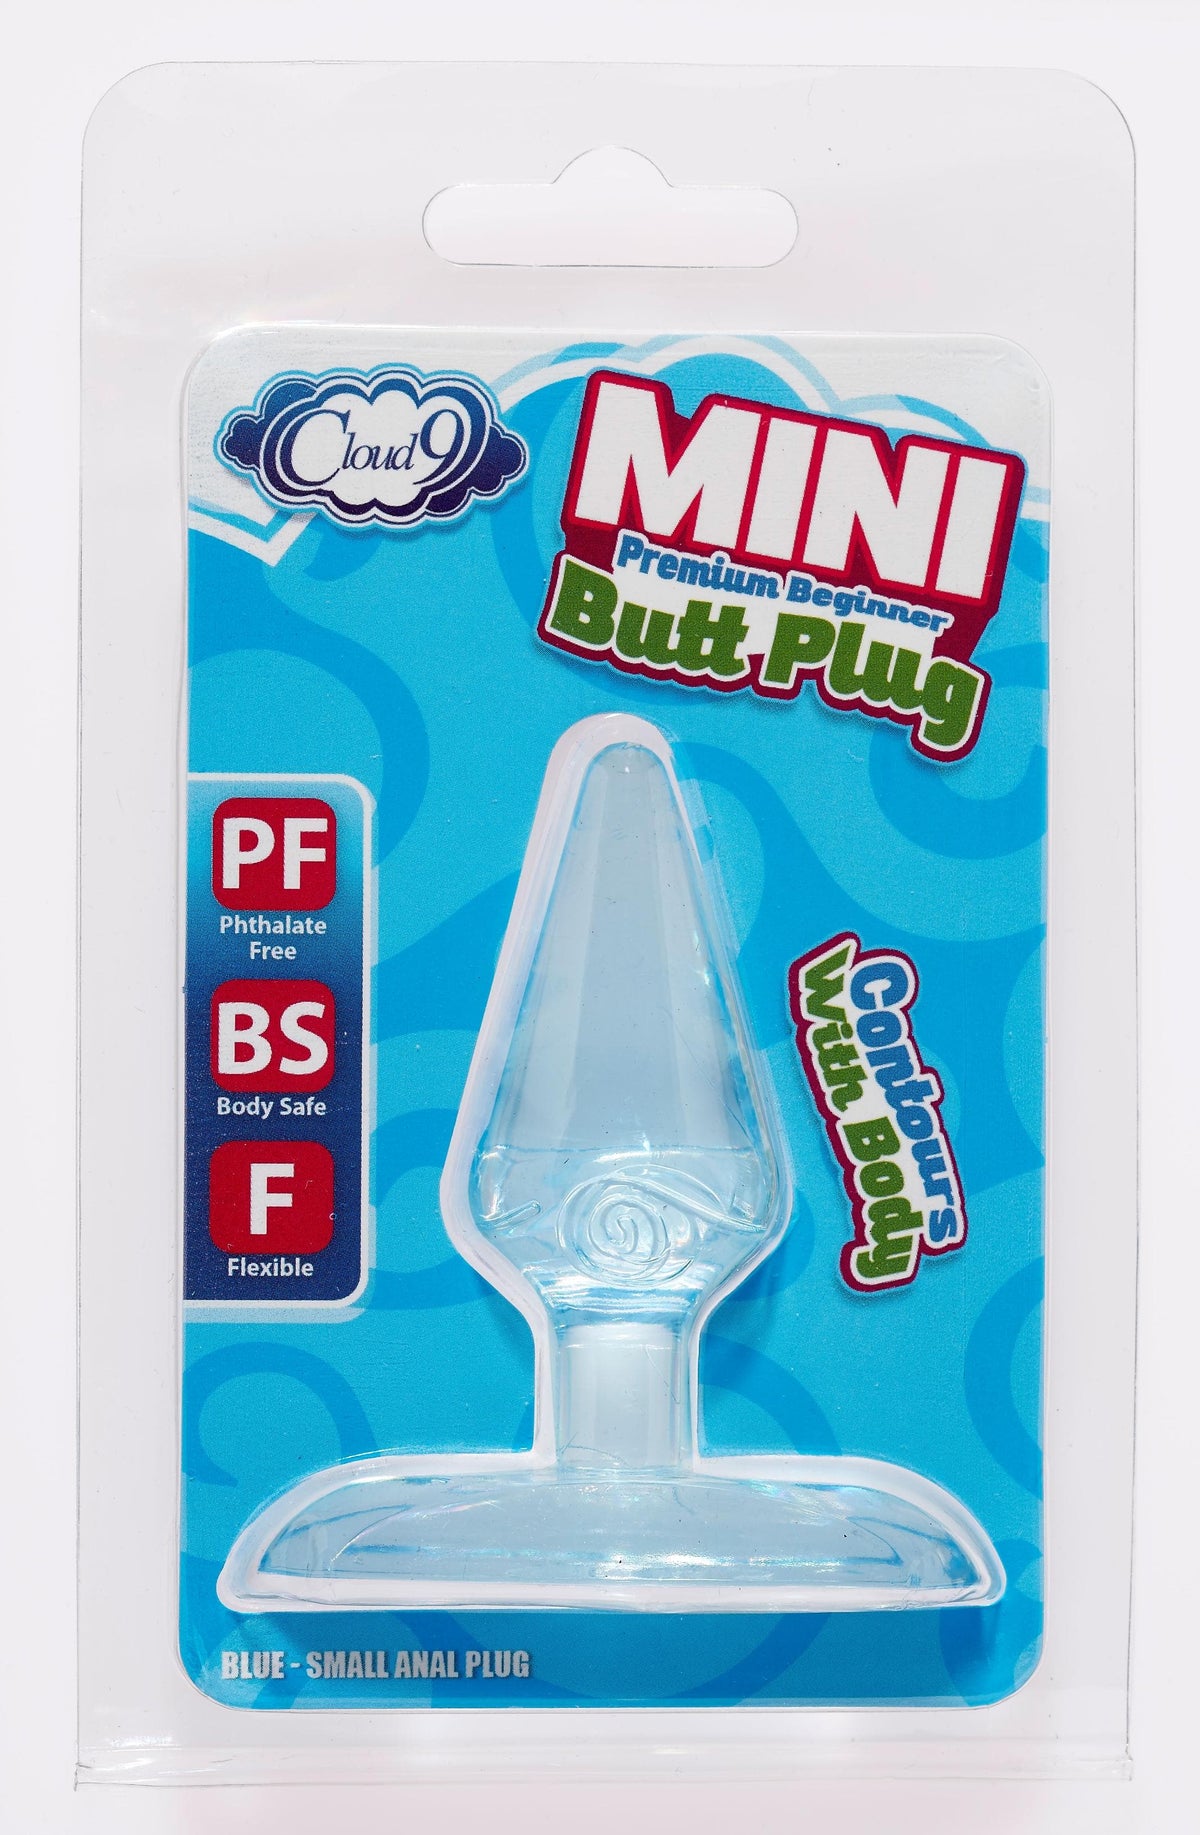 mini premium beginner butt plug blue